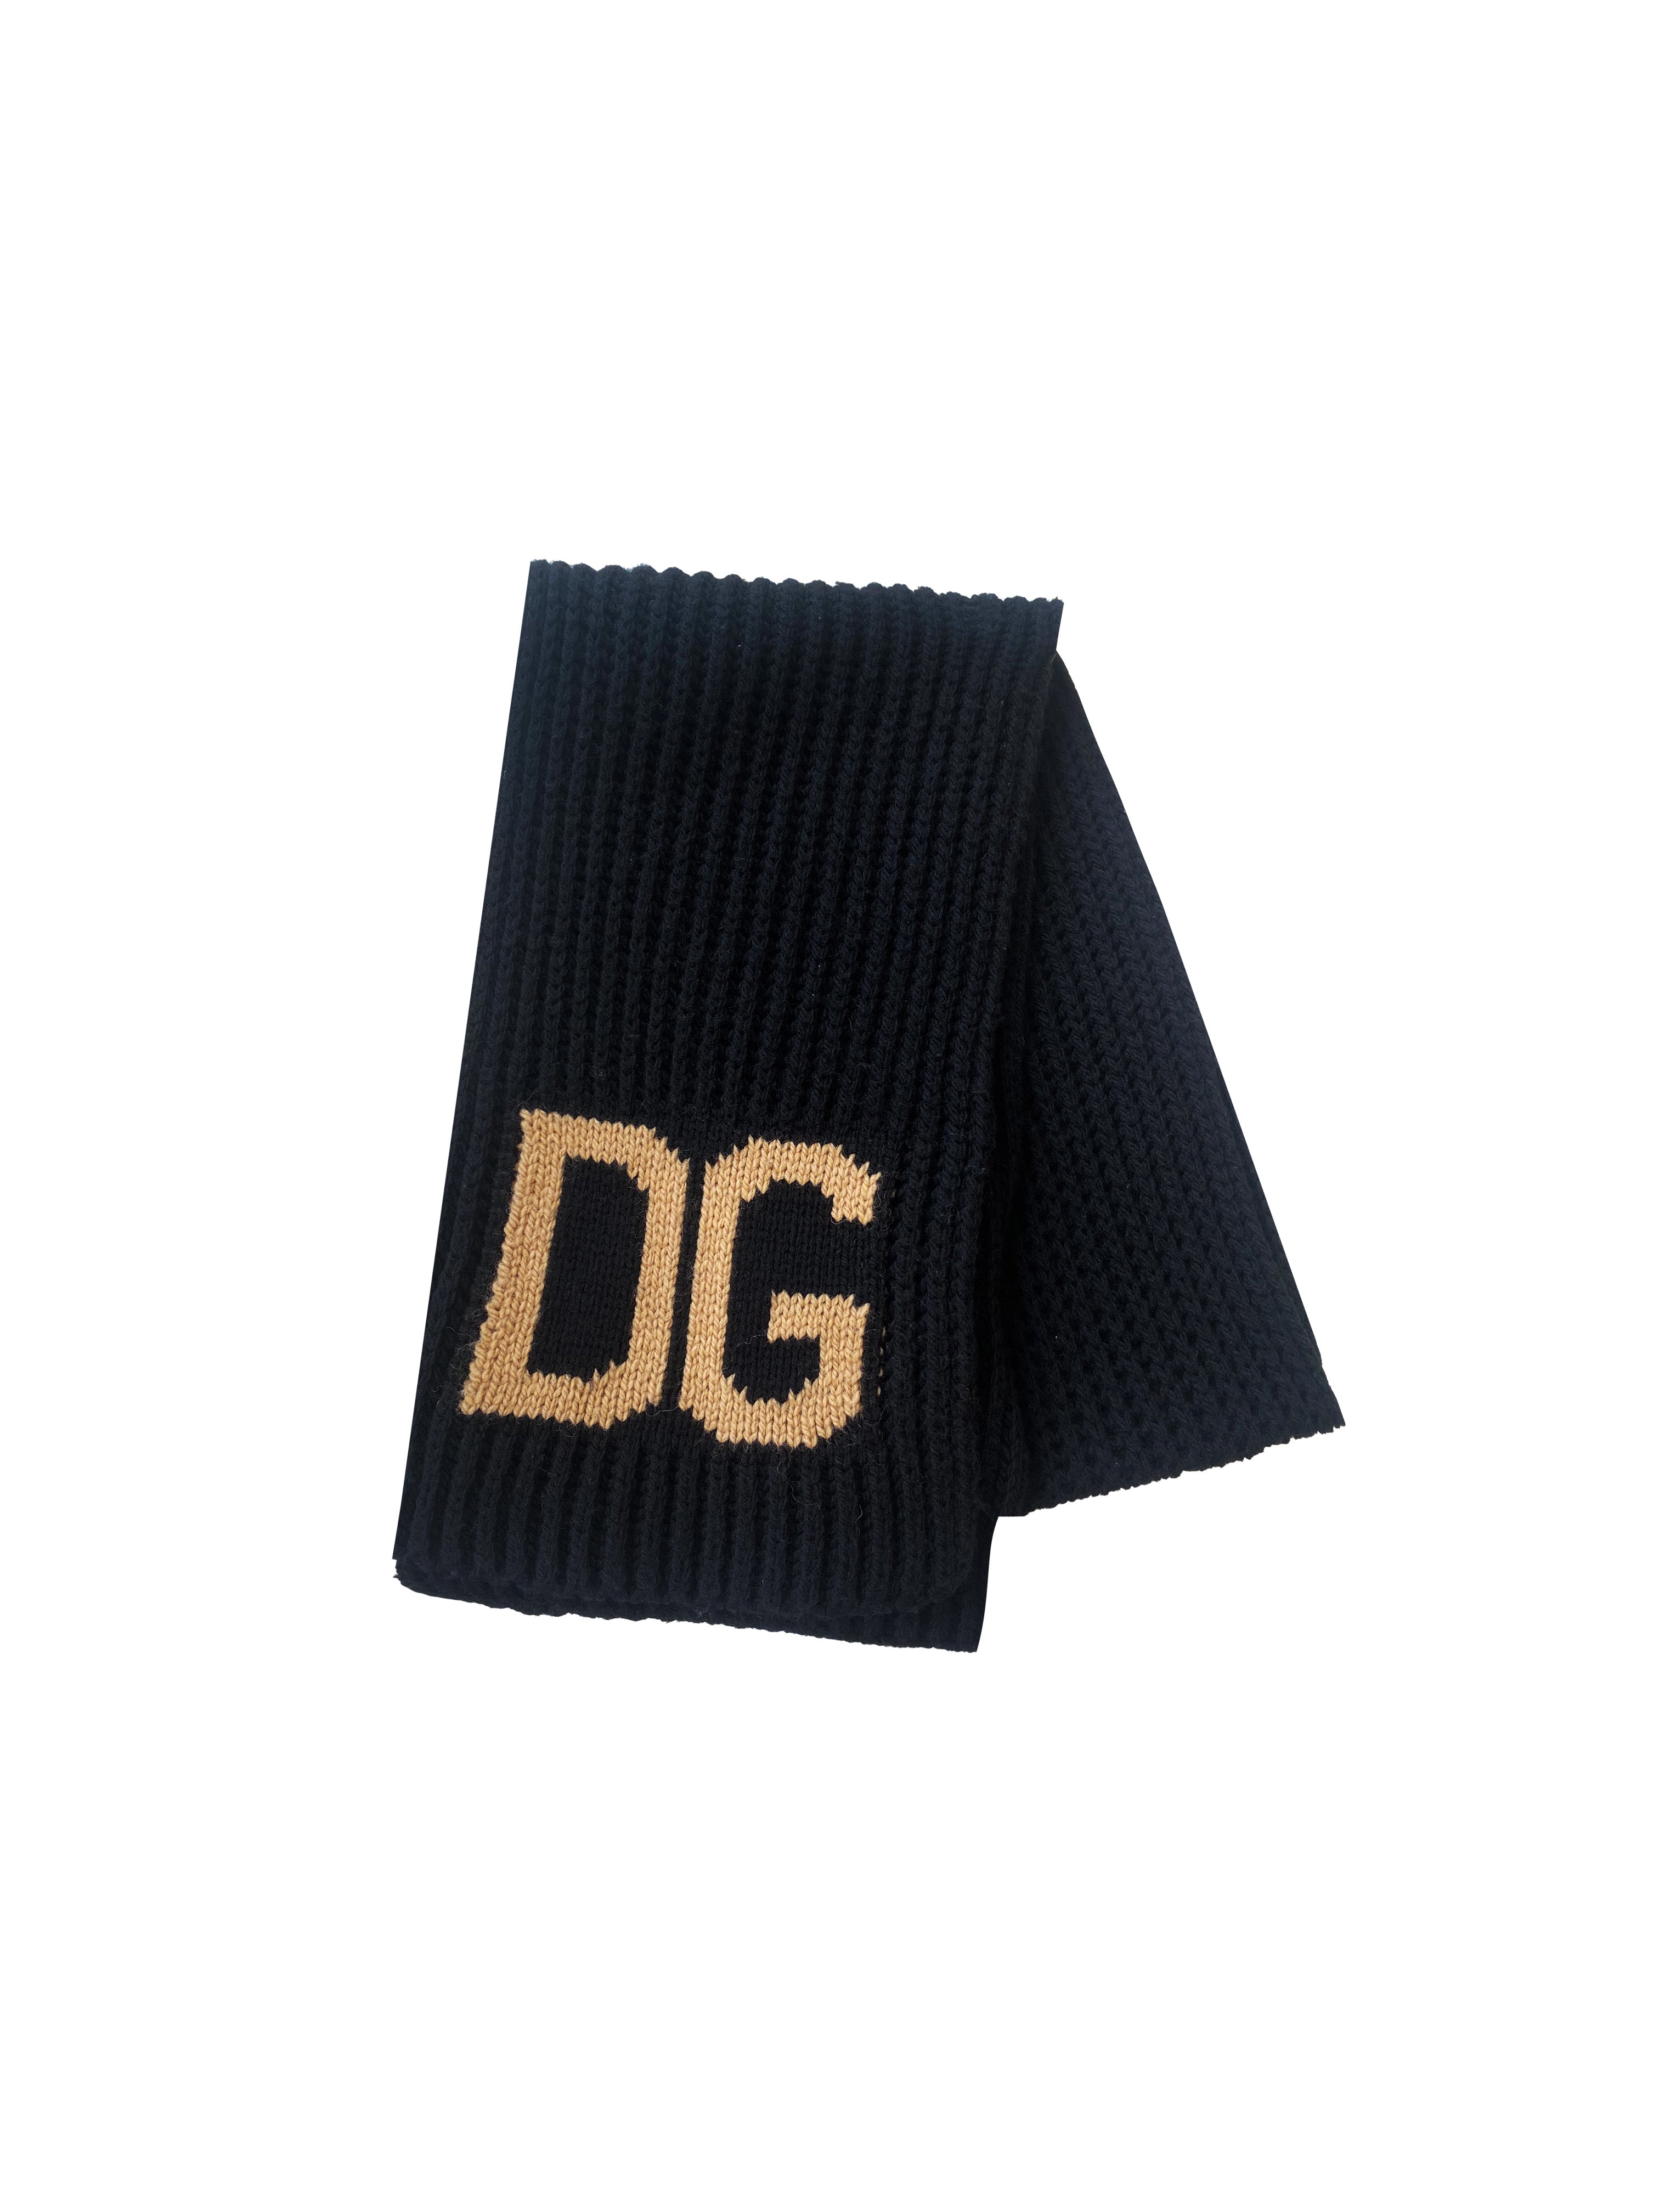 Dolce and Gabbana 2000s D&G Logo Scarf